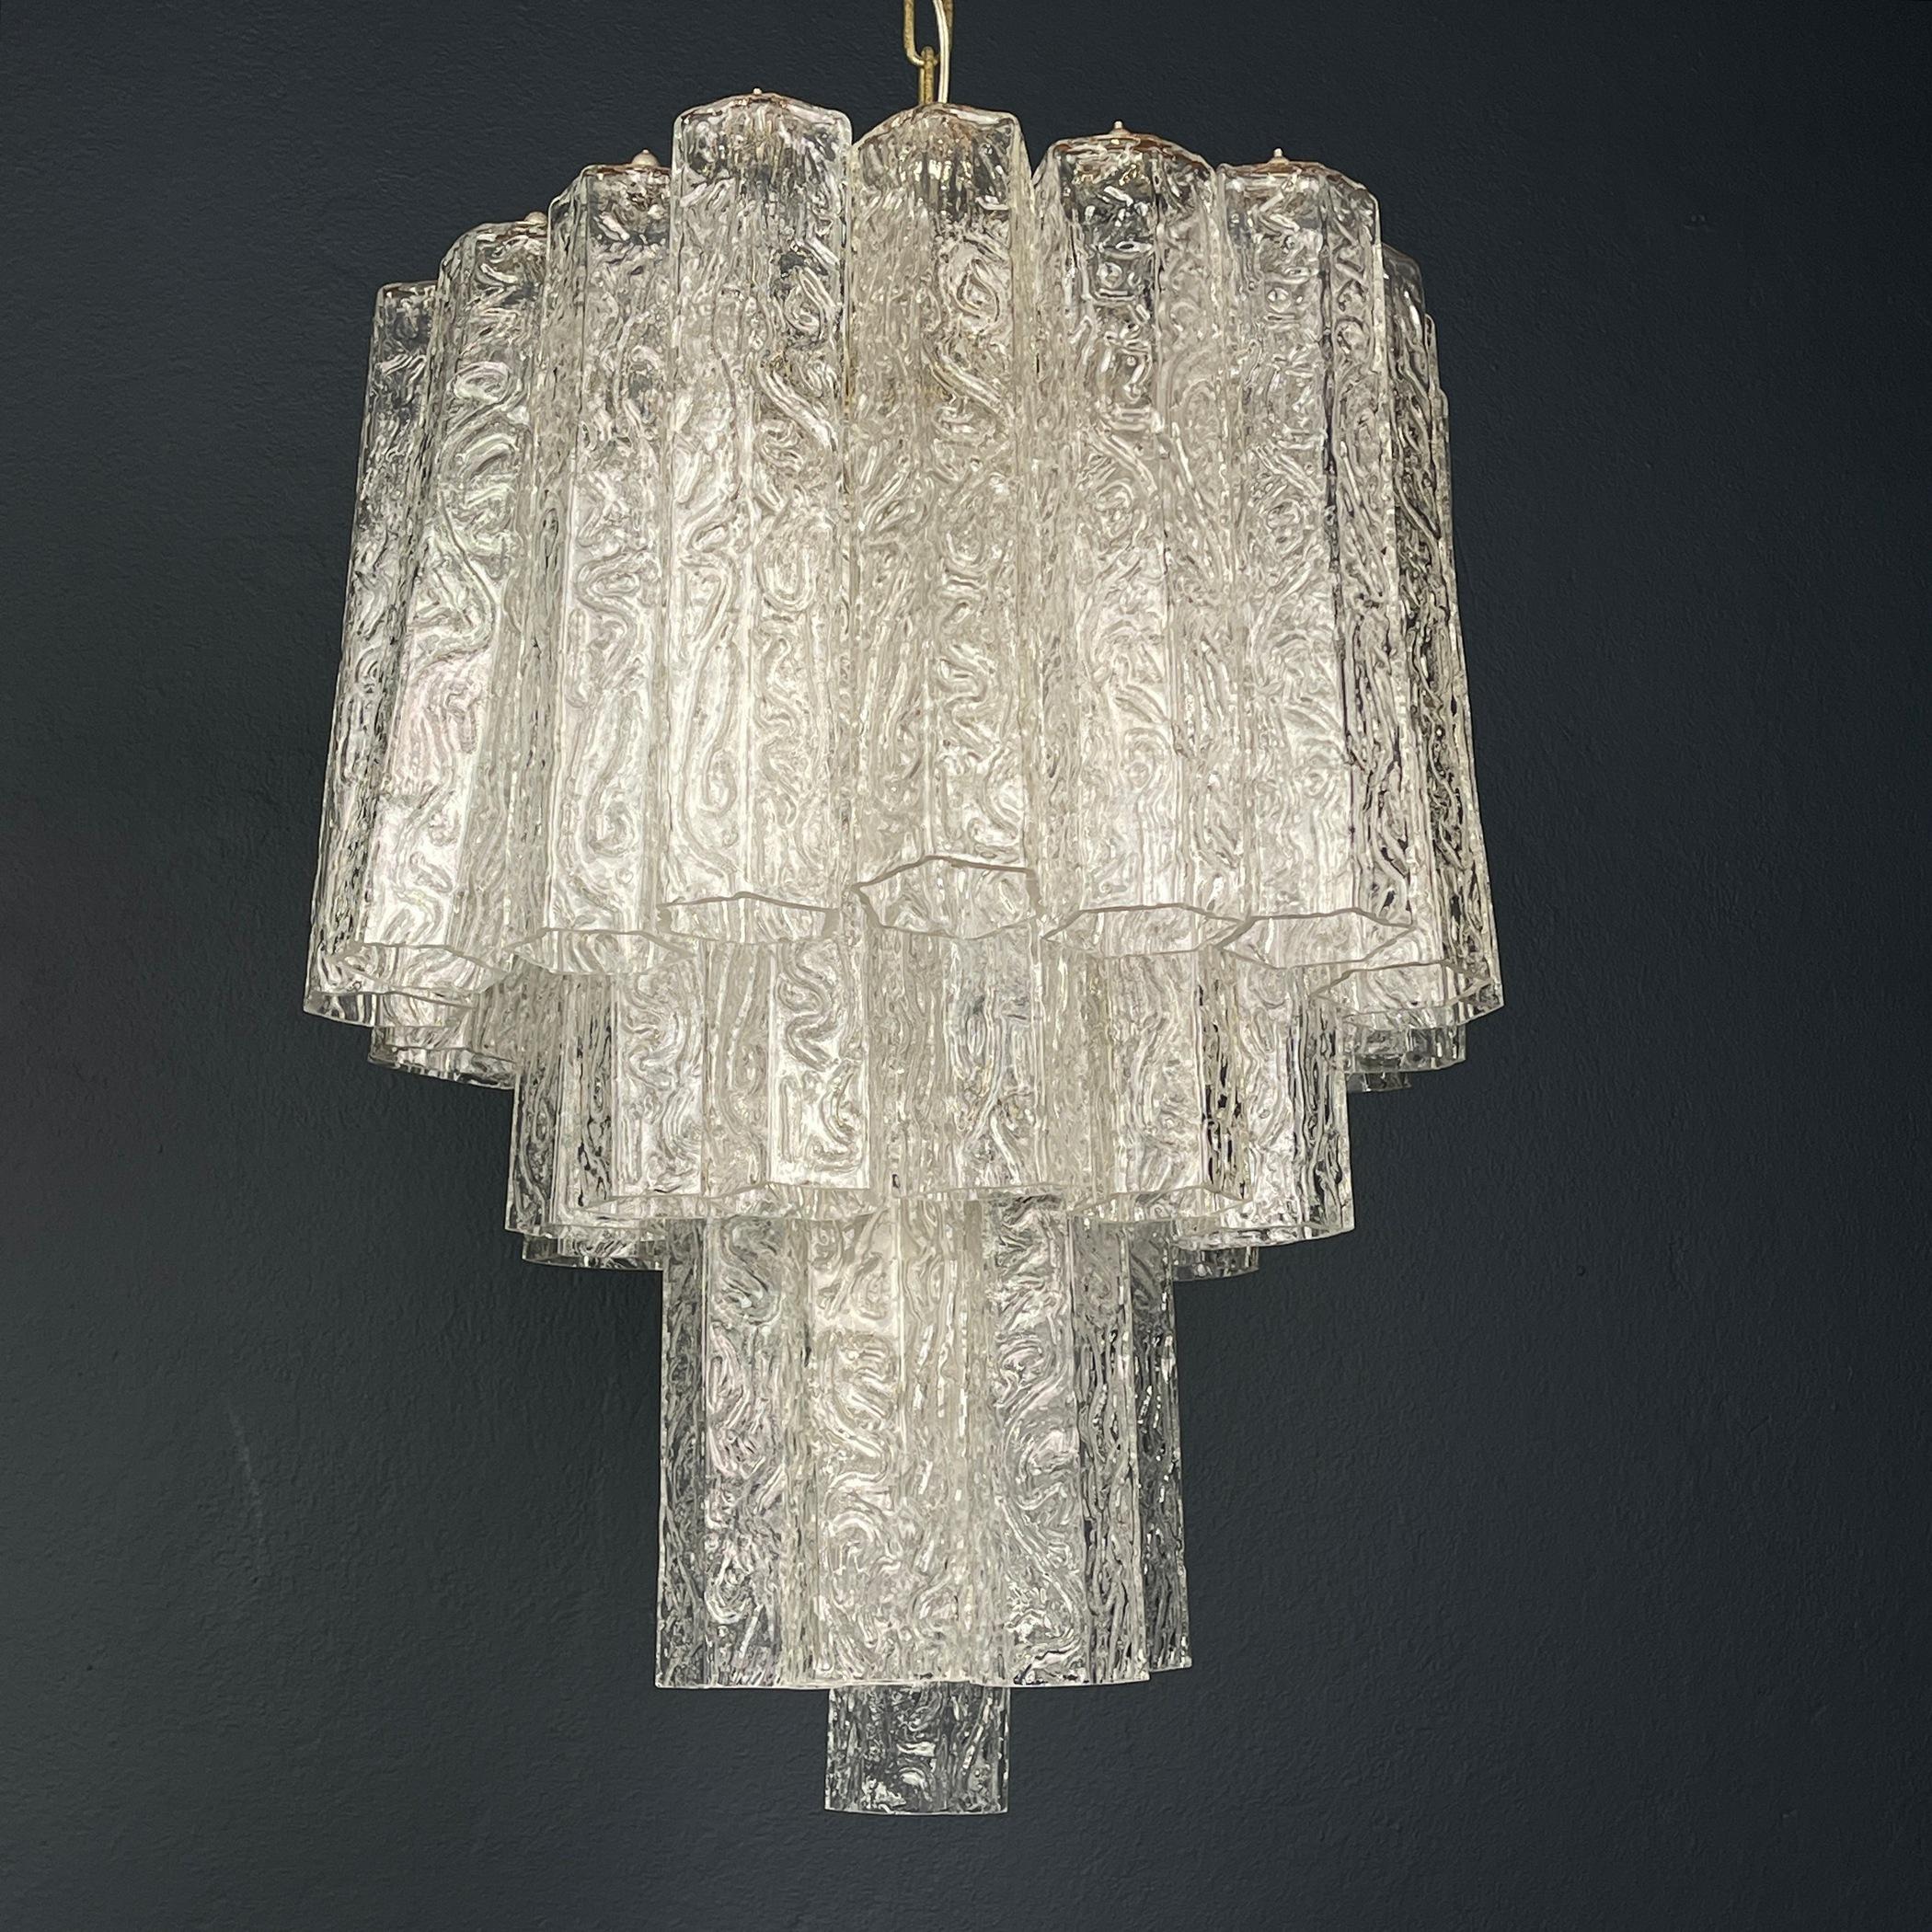 Mid-Century Modern Mid-century murano glass chandelier Tronchi by Venini Italy 1960s